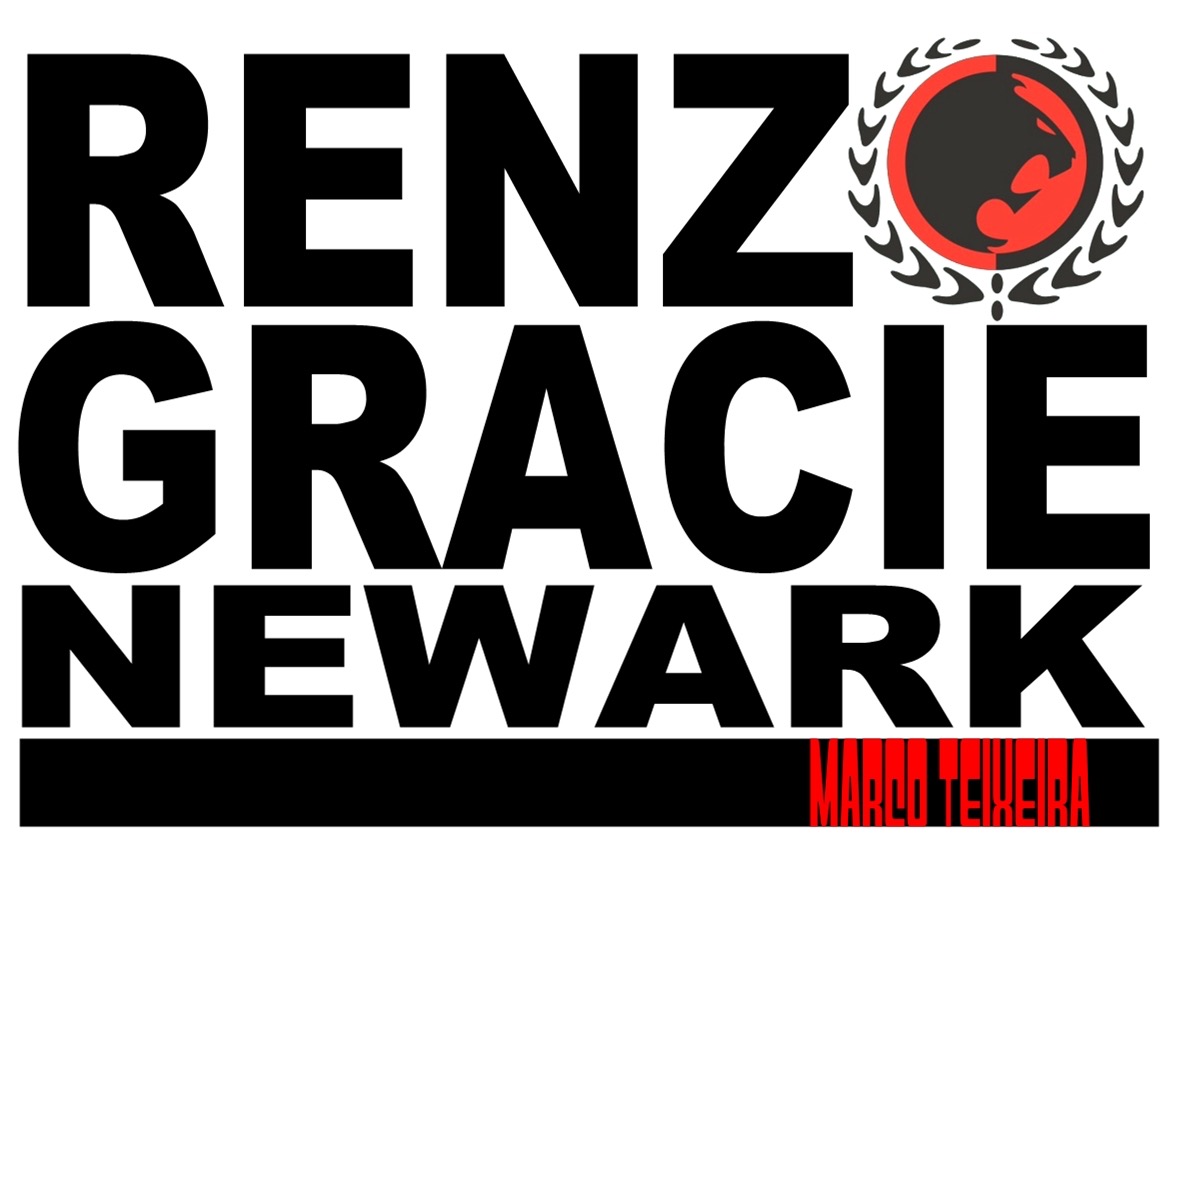 Photo of Renzo Gracie Newark Brazilian Jiu-Jitsu in Newark City, New Jersey, United States - 2 Picture of Point of interest, Establishment, Health